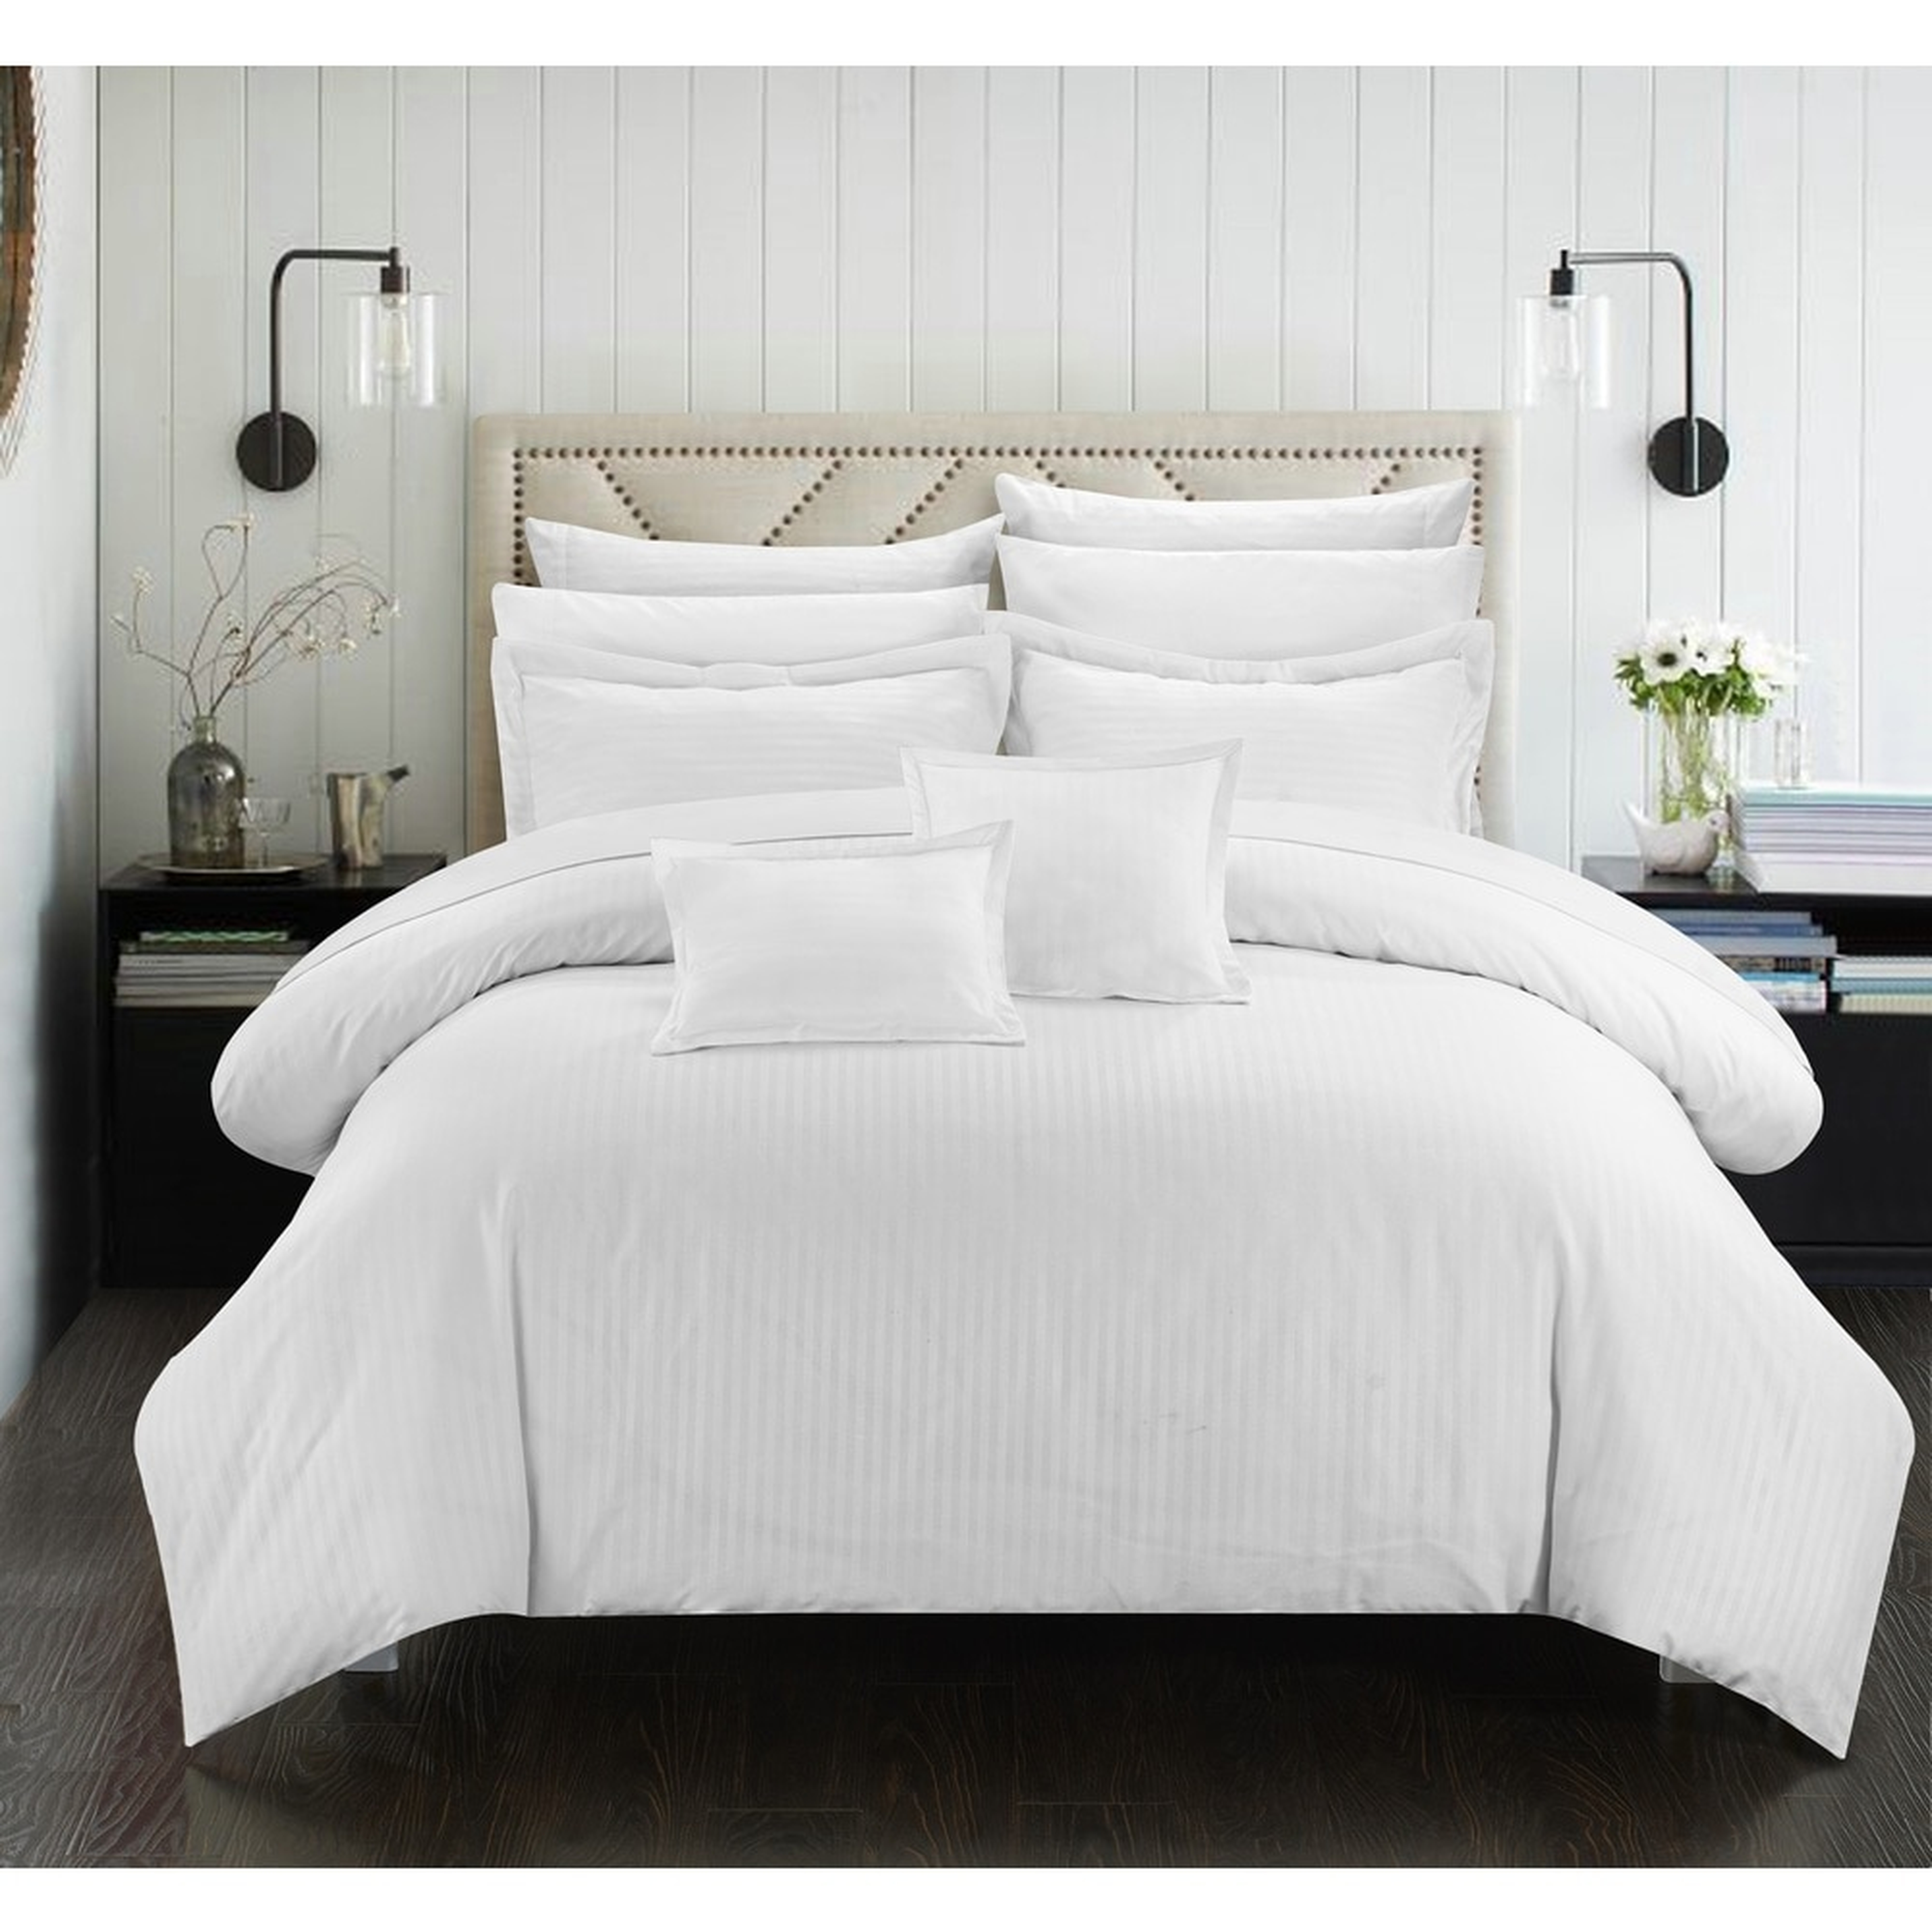 Porch & Den Mason Down Alternative Jacquard White Striped 7-piece Comforter Set - Queen/Full - Queen/Full - Overstock